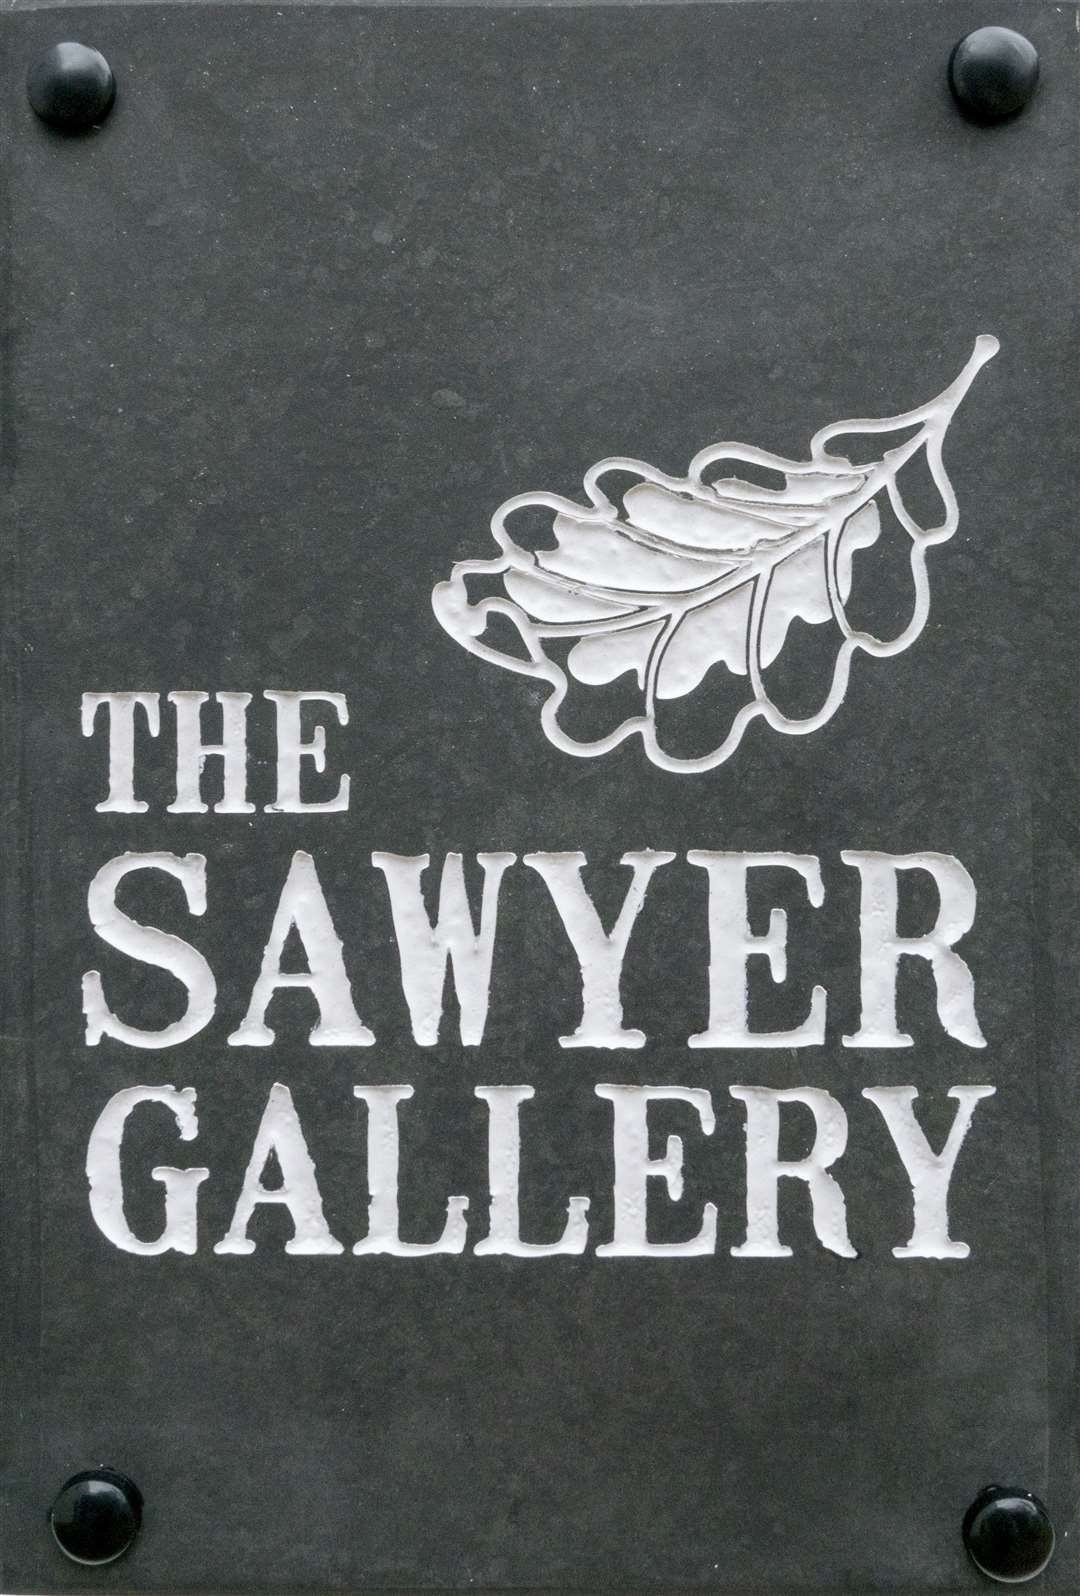 The Sawyer Gallery